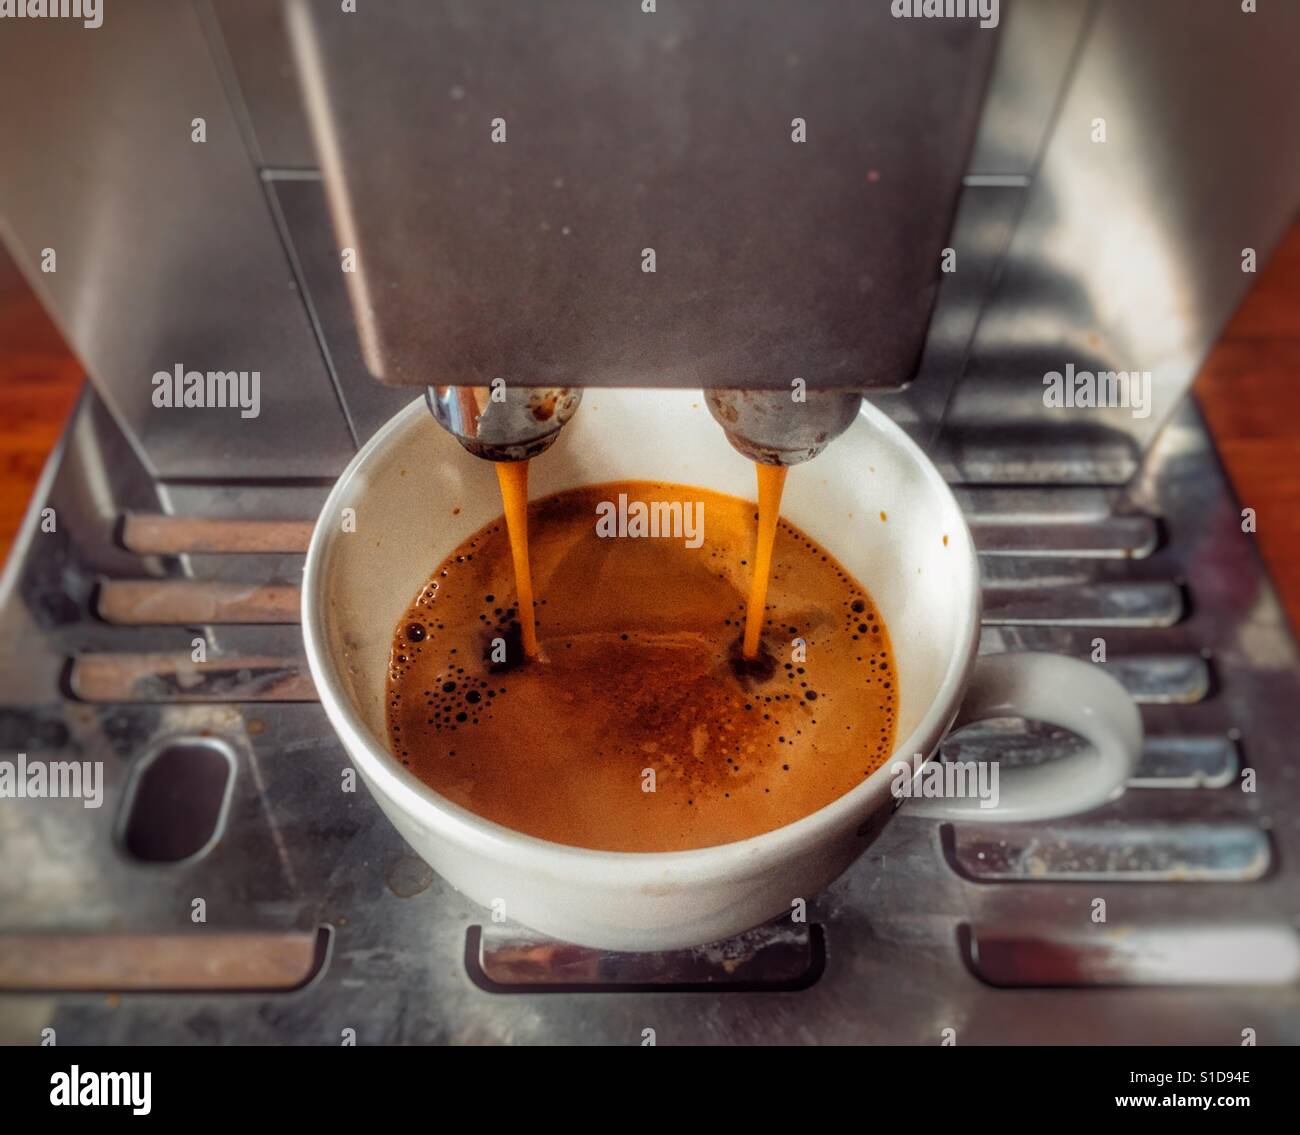 https://c8.alamy.com/comp/S1D94E/delonghi-bean-to-cup-coffee-machine-S1D94E.jpg